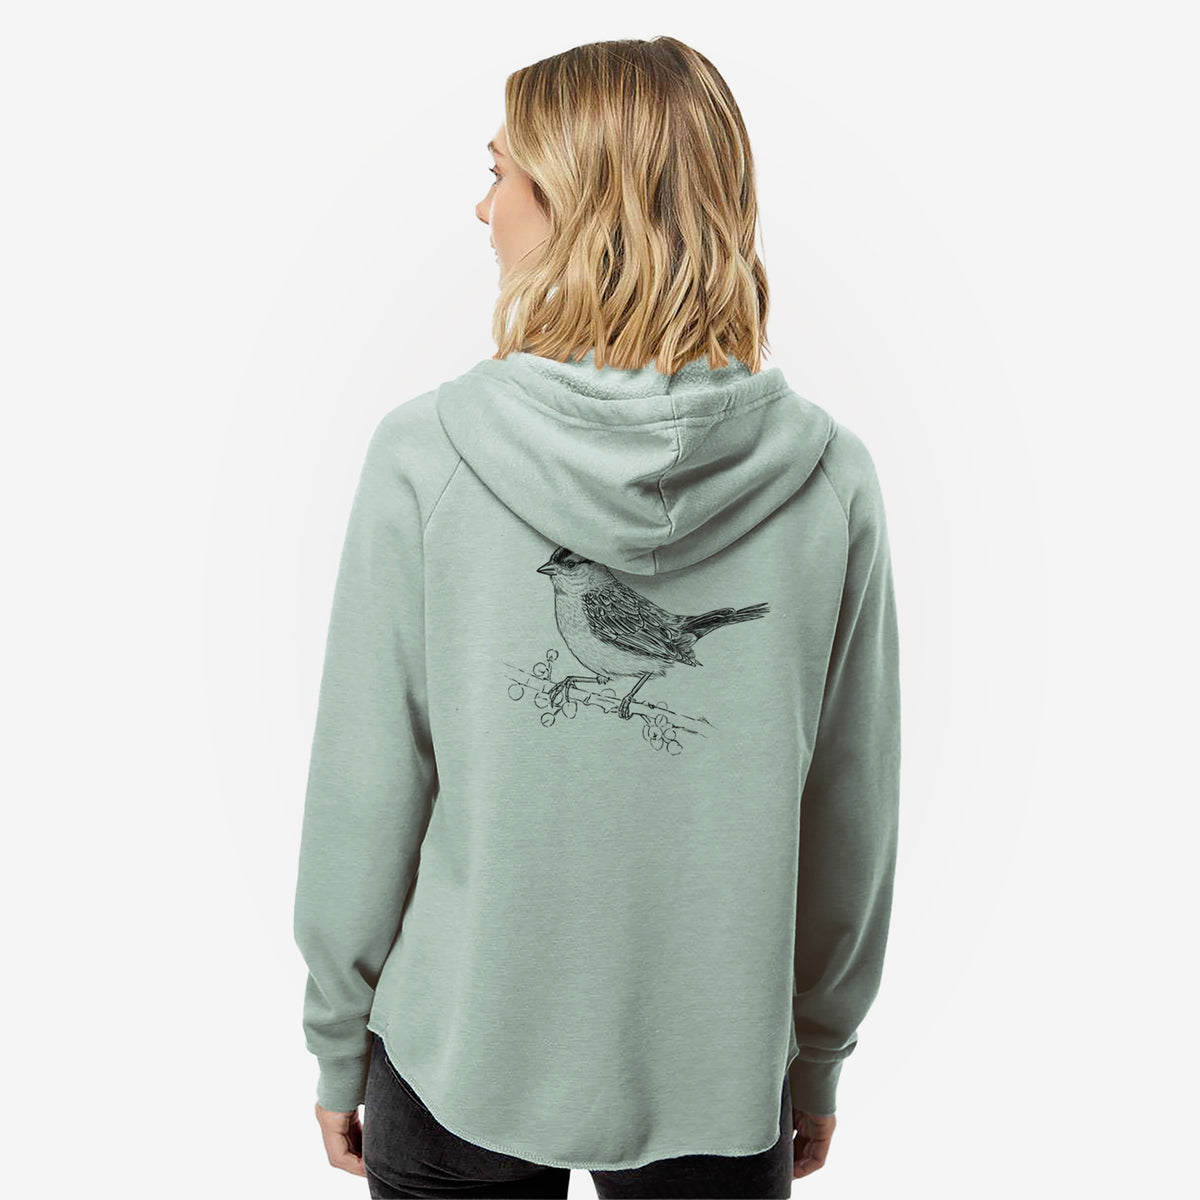 White-crowned Sparrow - Zonotrichia leucophrys - Women&#39;s Cali Wave Zip-Up Sweatshirt